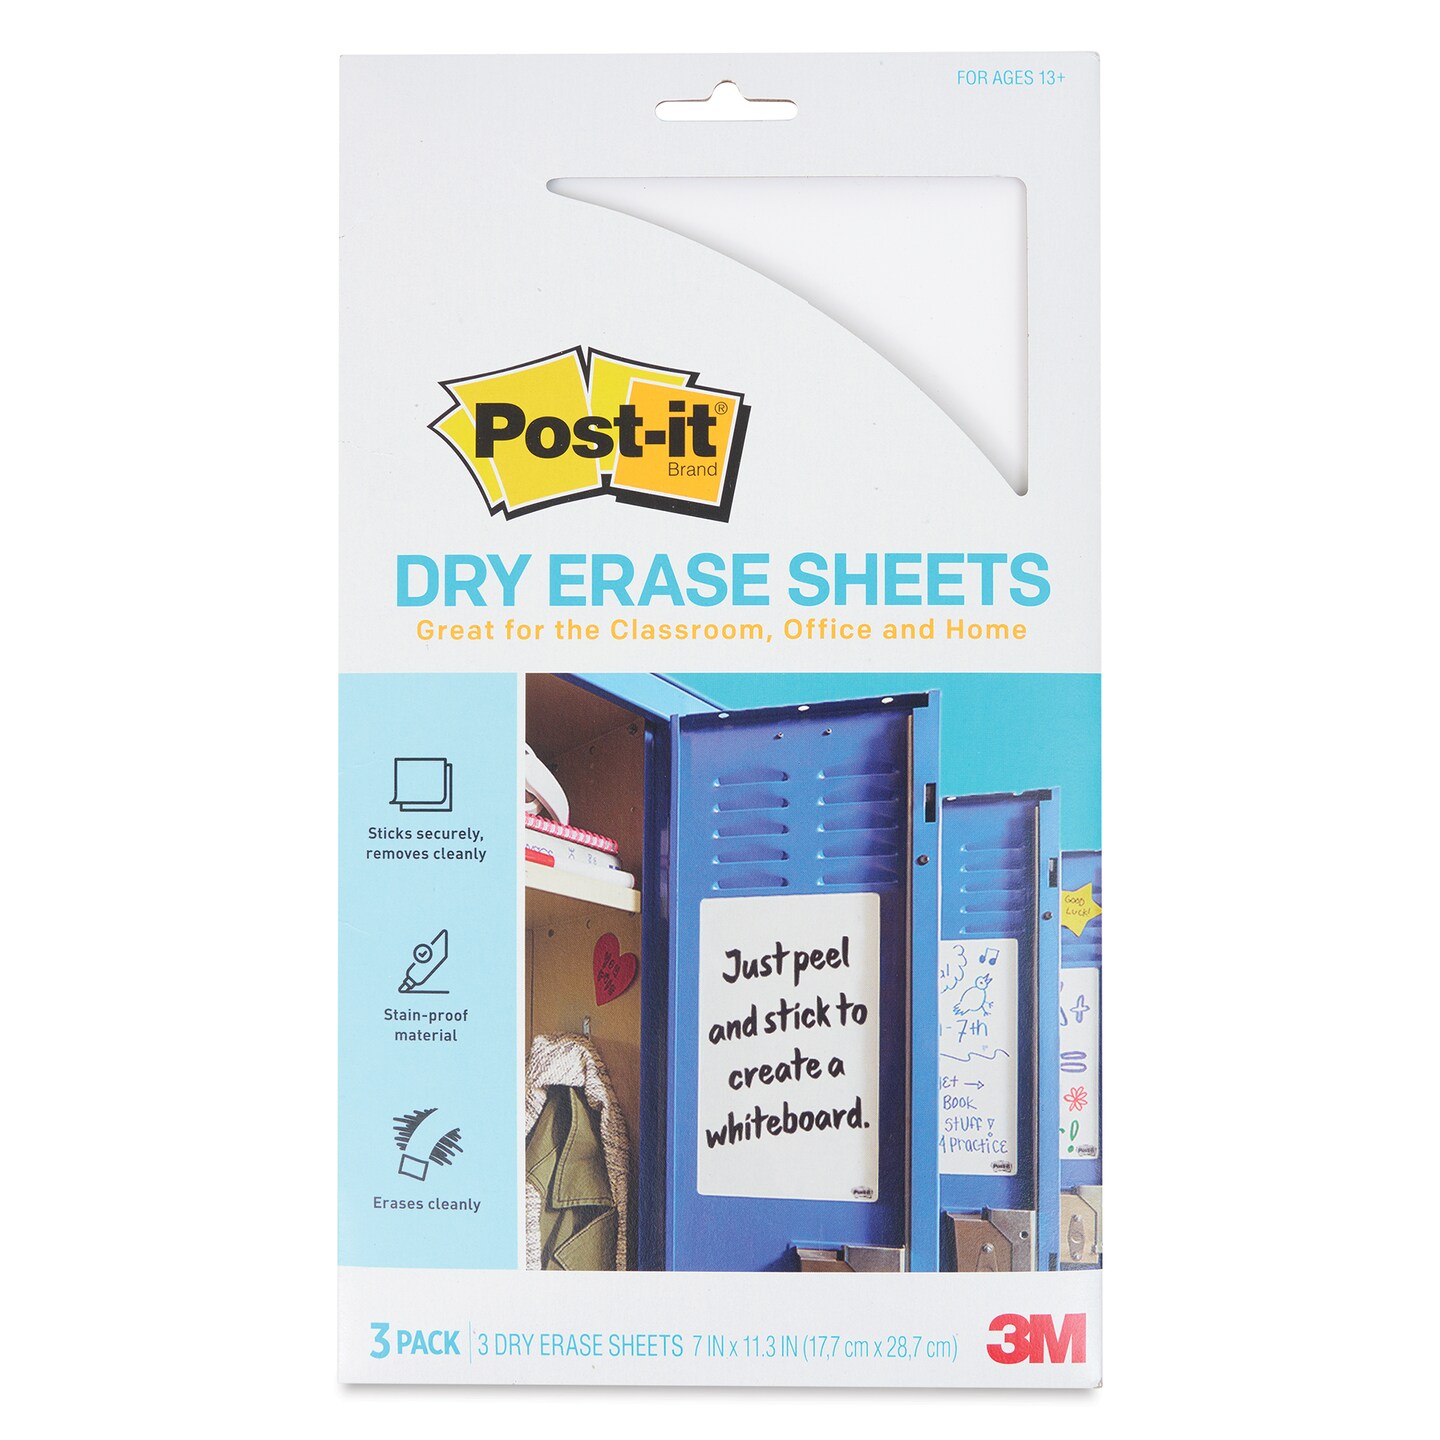 Post-it Dry Erase Sheets - Pkg of 3